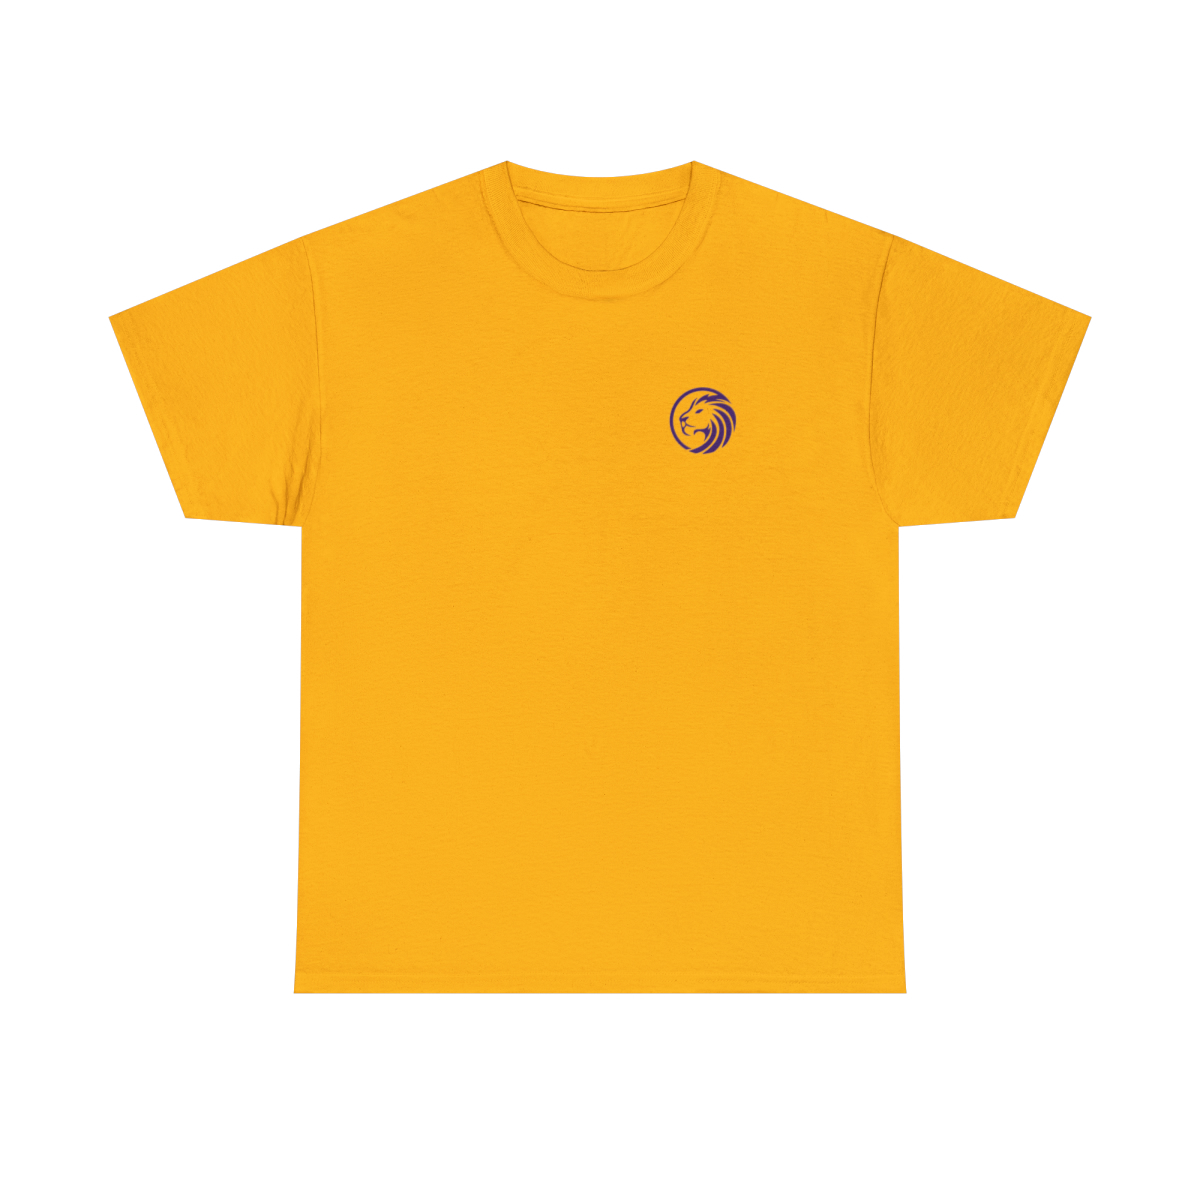 Boulevard Society gold t-shirt